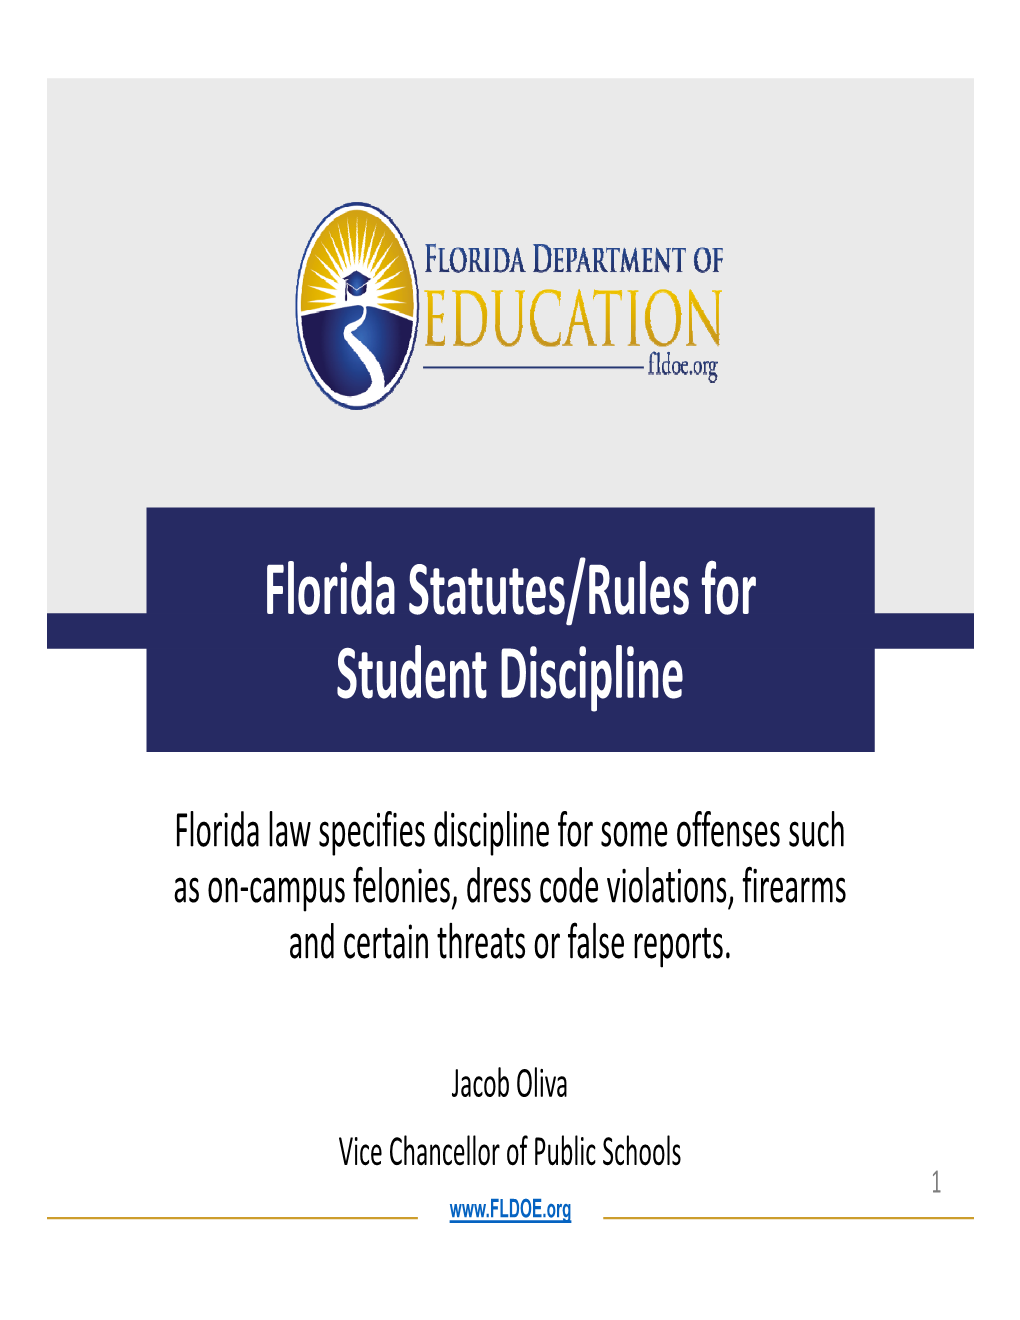 Florida Statutes/Rules for Student Discipline